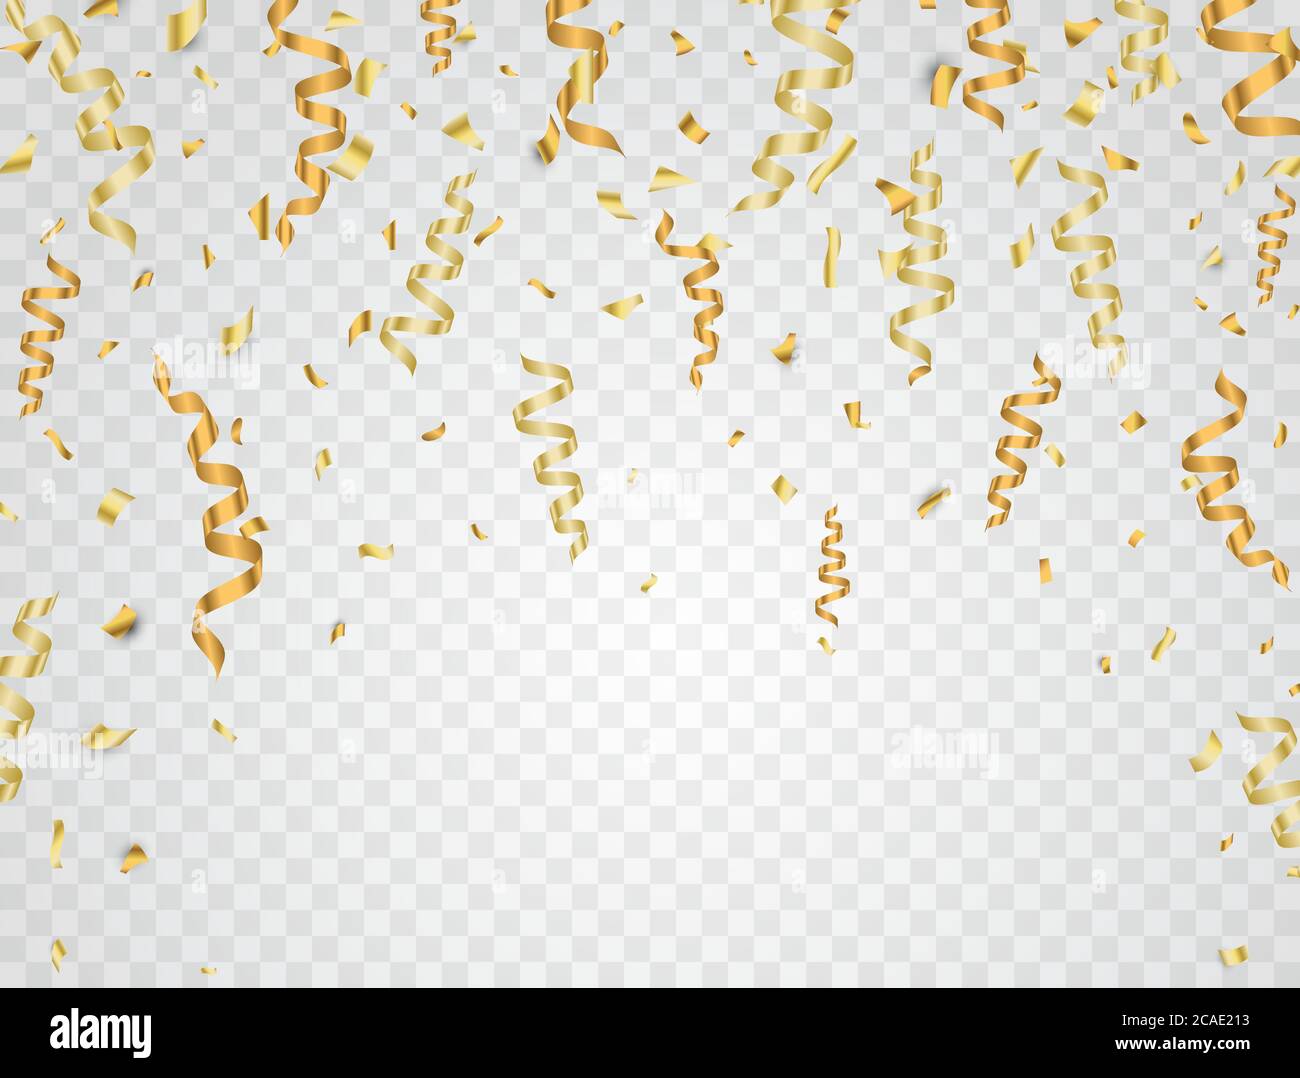 Celebration background. Gold confetti on transparent background. Vector illustration. Stock Vector